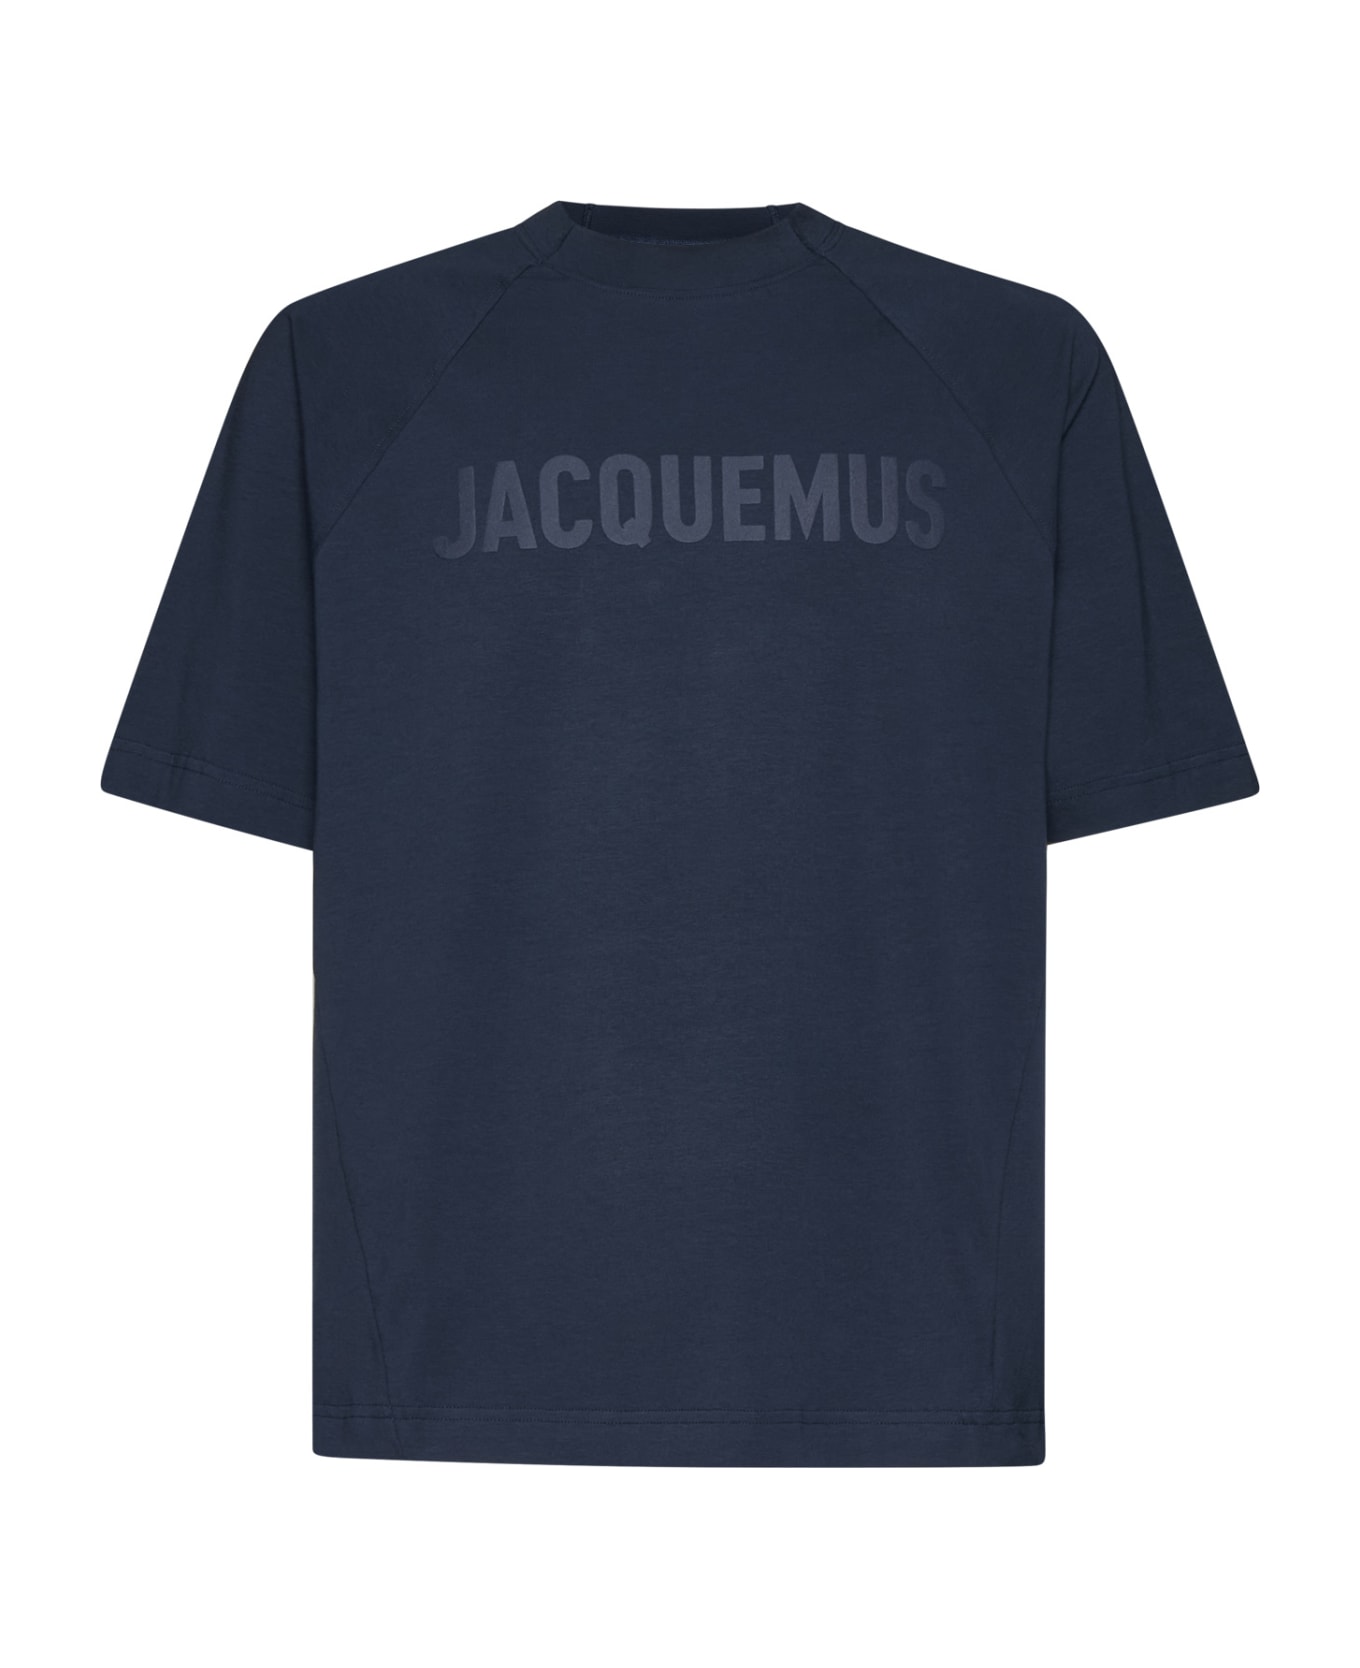 Jacquemus Typo Crewneck T-shirt - Dark navy Tシャツ